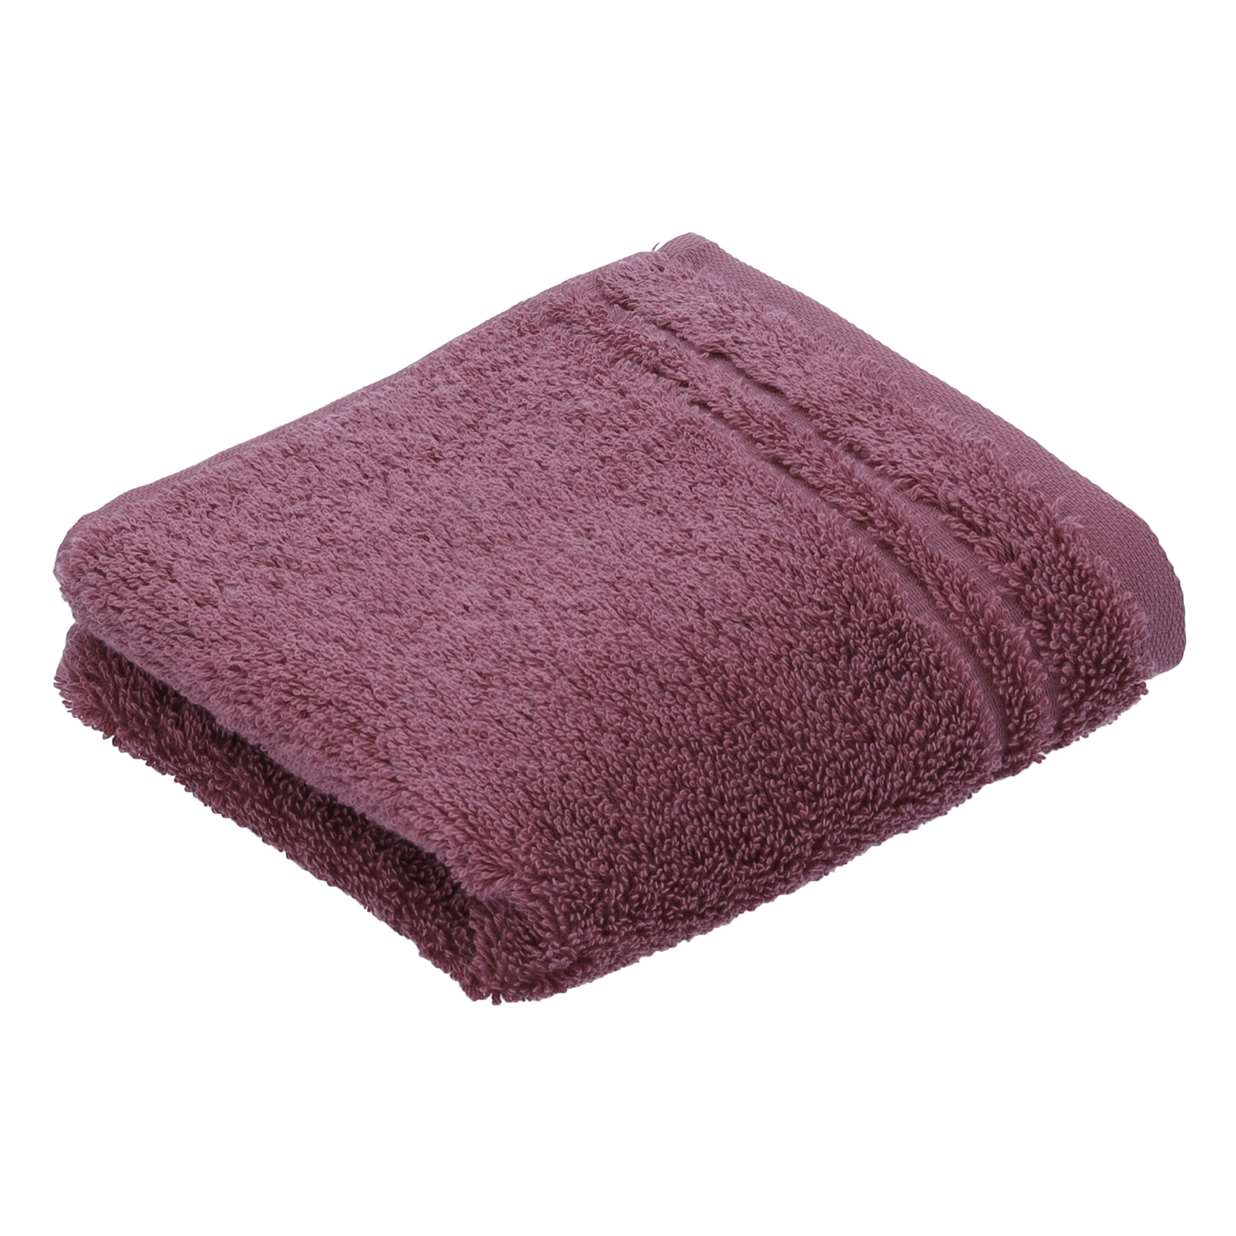 Vienna Style Blackberry organic cotton towel